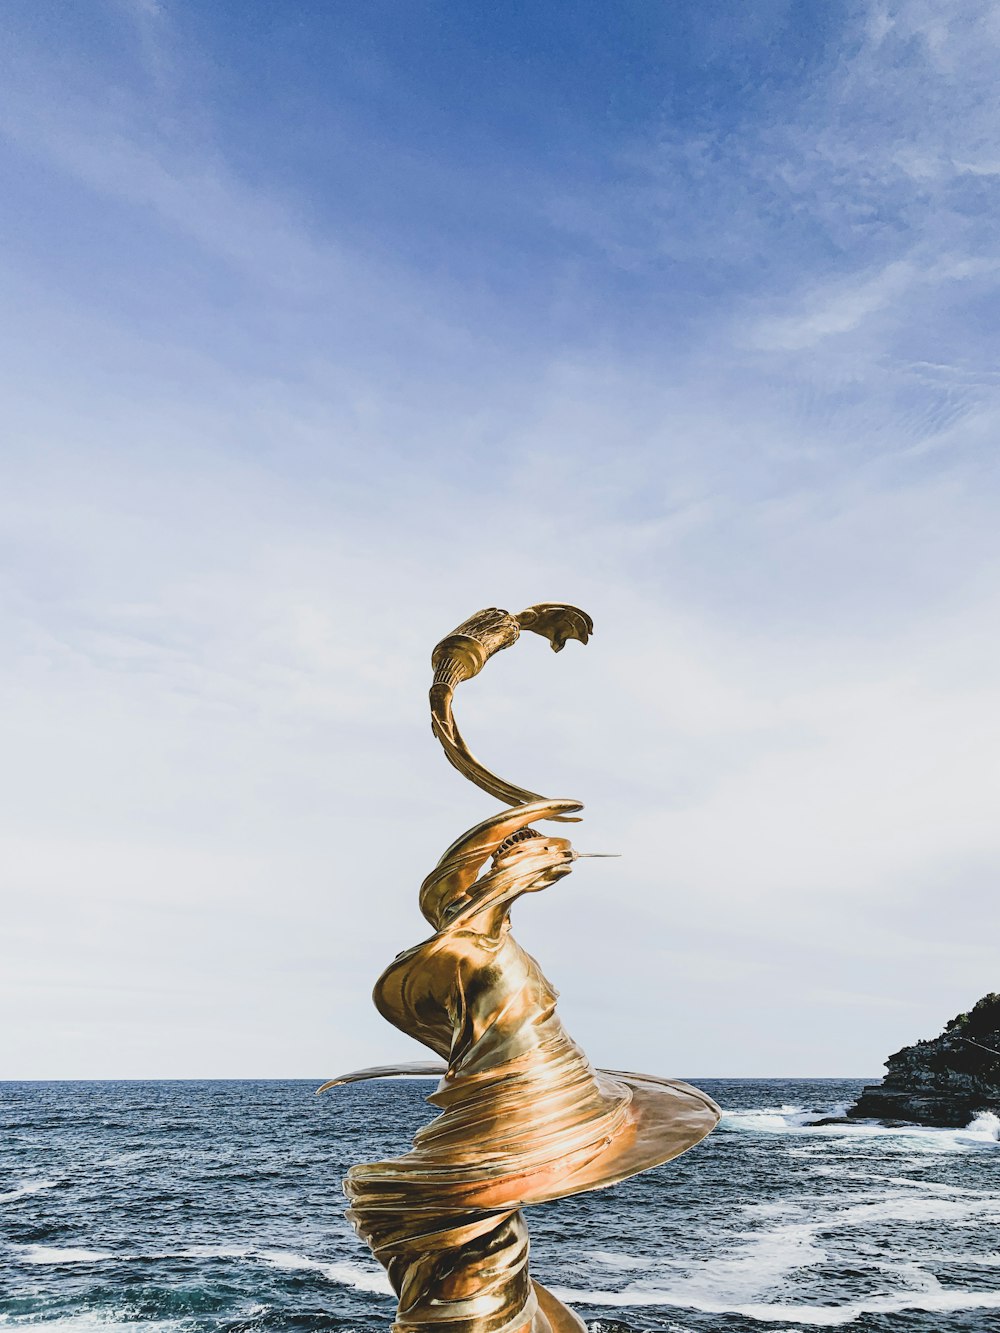 swirl gold statue near seashore under white and blue sky